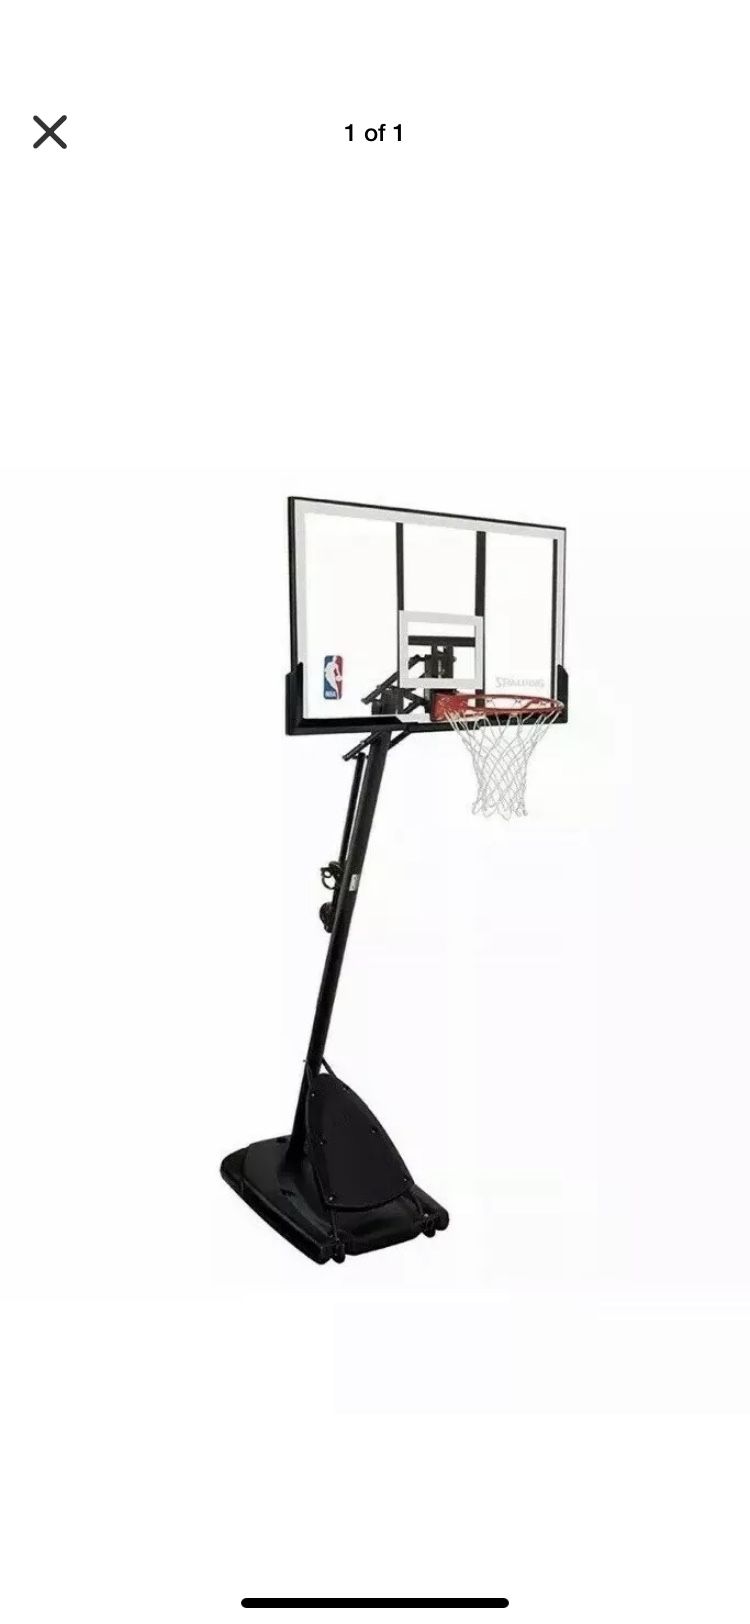 Spalding 54" Portable Basketball System Adjustable Hoop Backboard Angled Pole